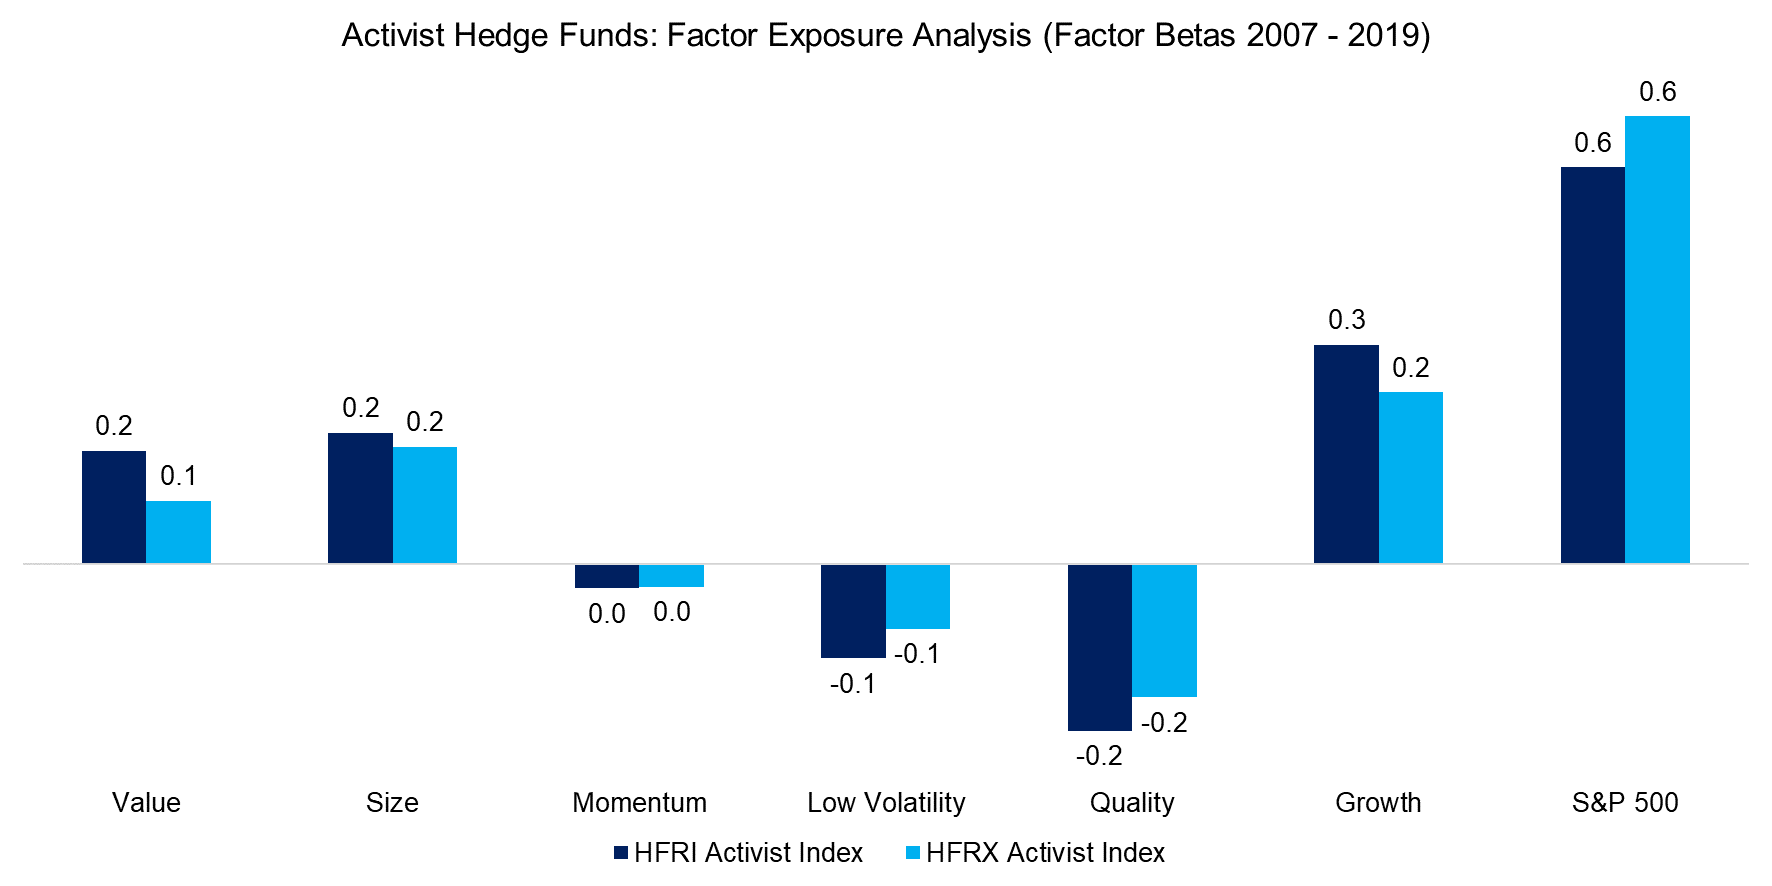 Activist Hedge Funds Factor Exposure Analysis (Factor Betas 2007 - 2019)